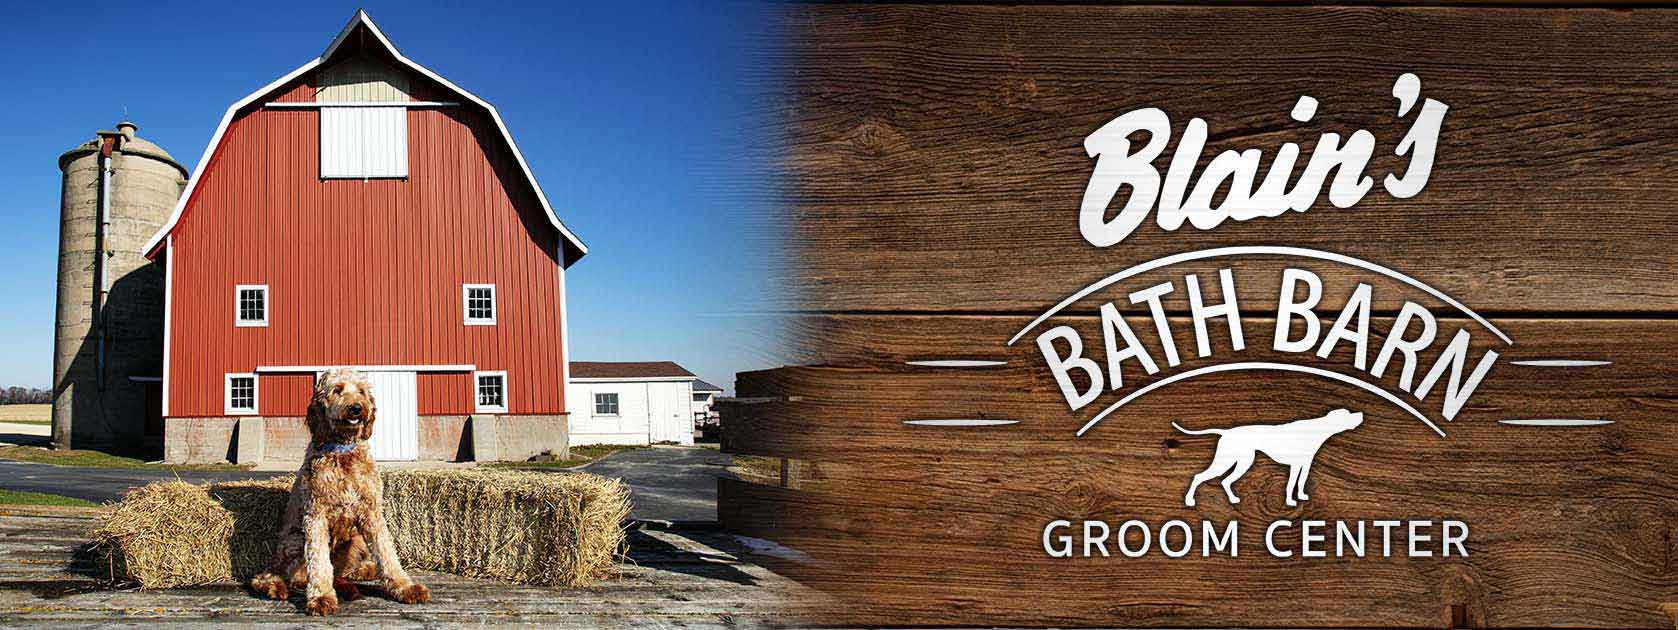 Blain’s Farm & Fleet Bath Barn